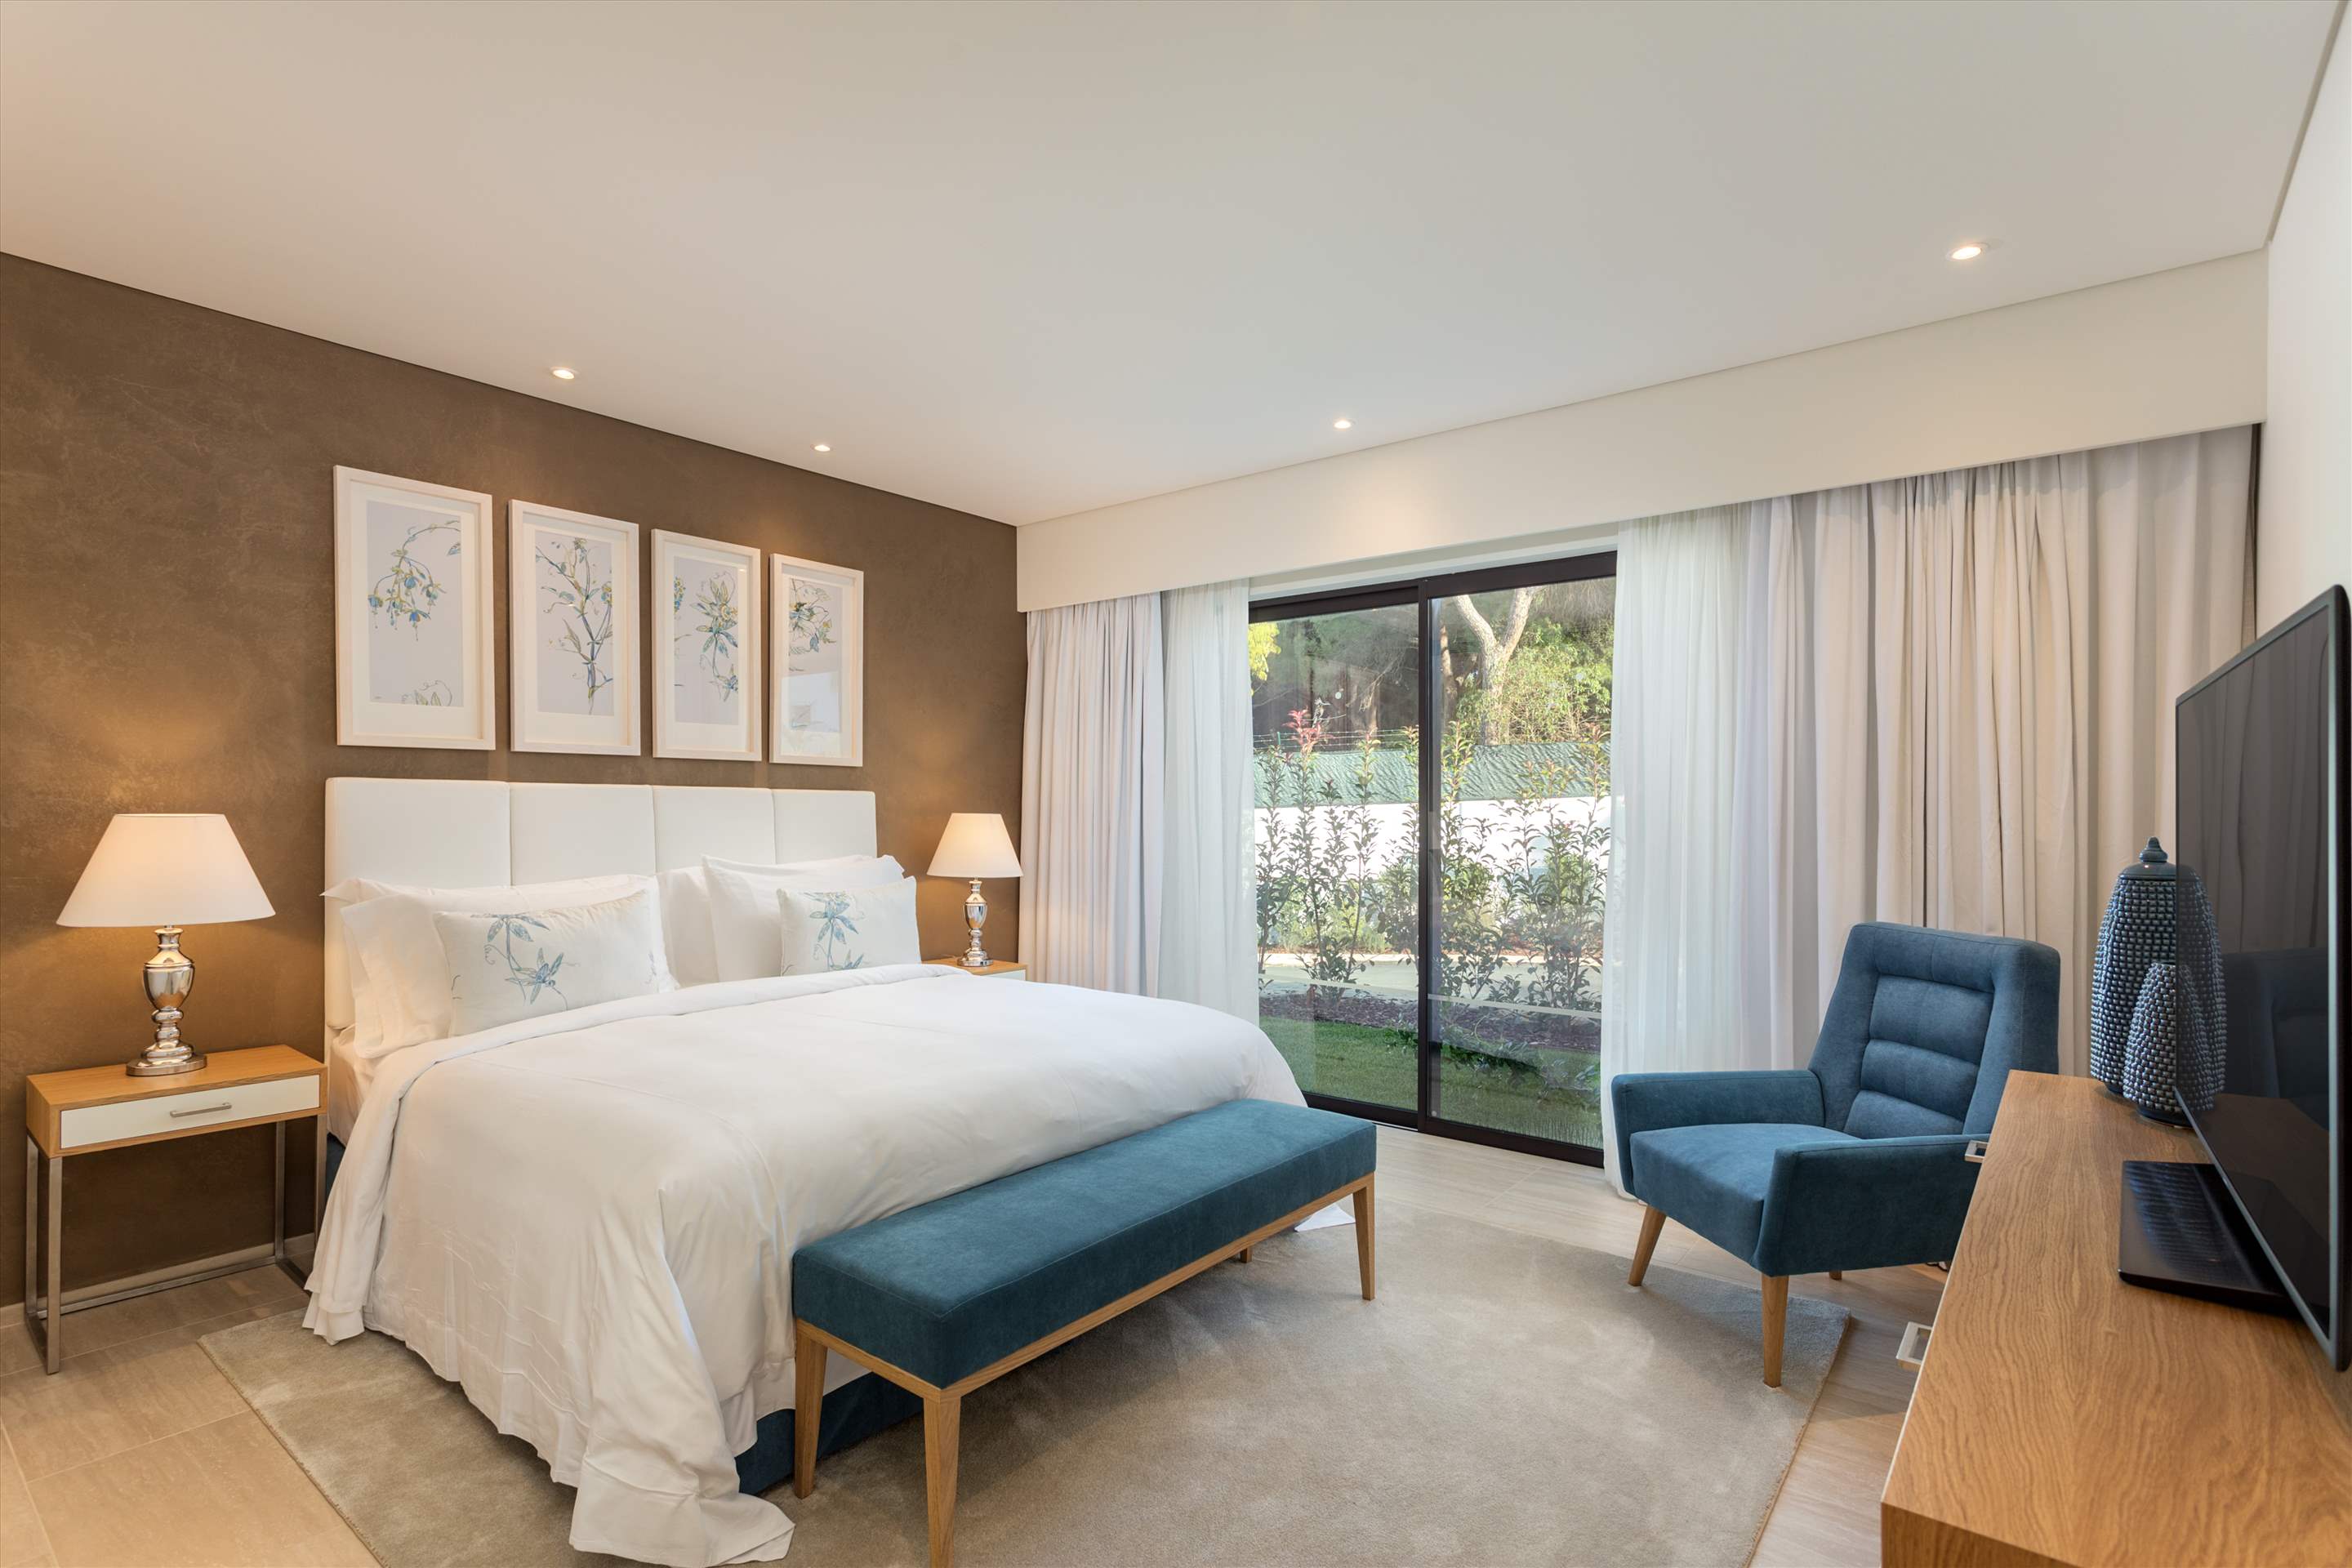 Pine Cliffs Gardens, Two Bedroom Suite, S/C Basis, 2 bedroom apartment in Pine Cliffs Resort, Algarve Photo #18